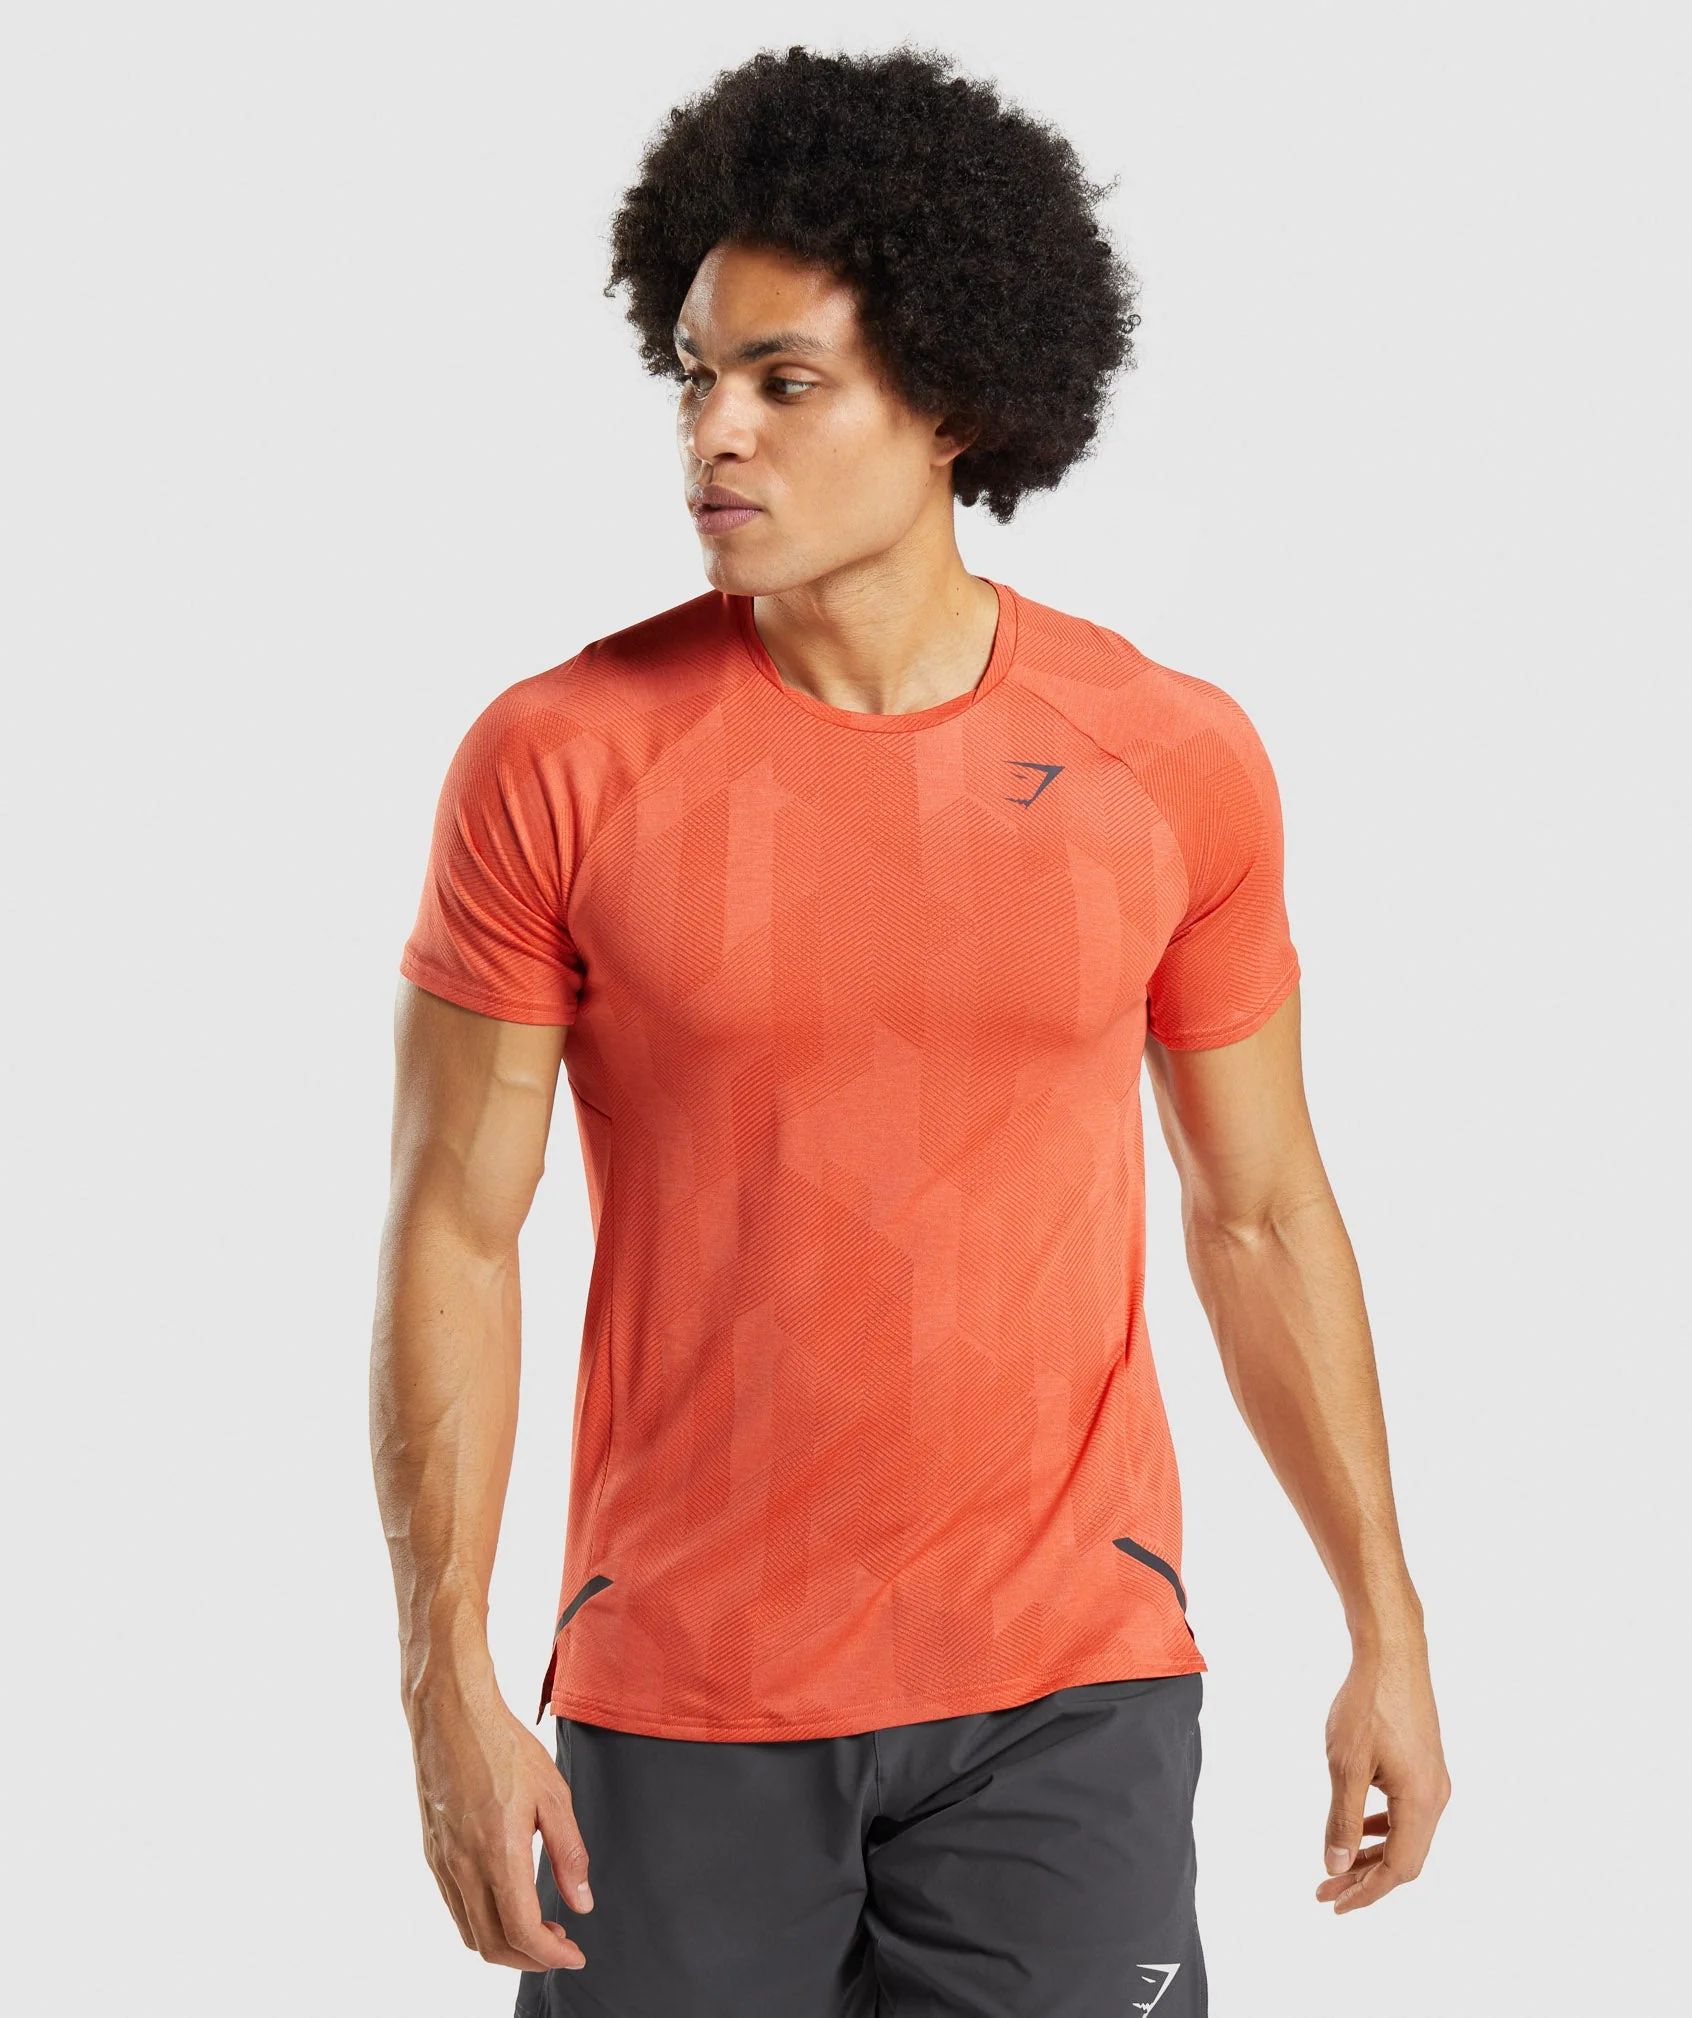 Gymshark Apex T-Shirt - Spicy Orange/Papaya Orange | Gymshark US